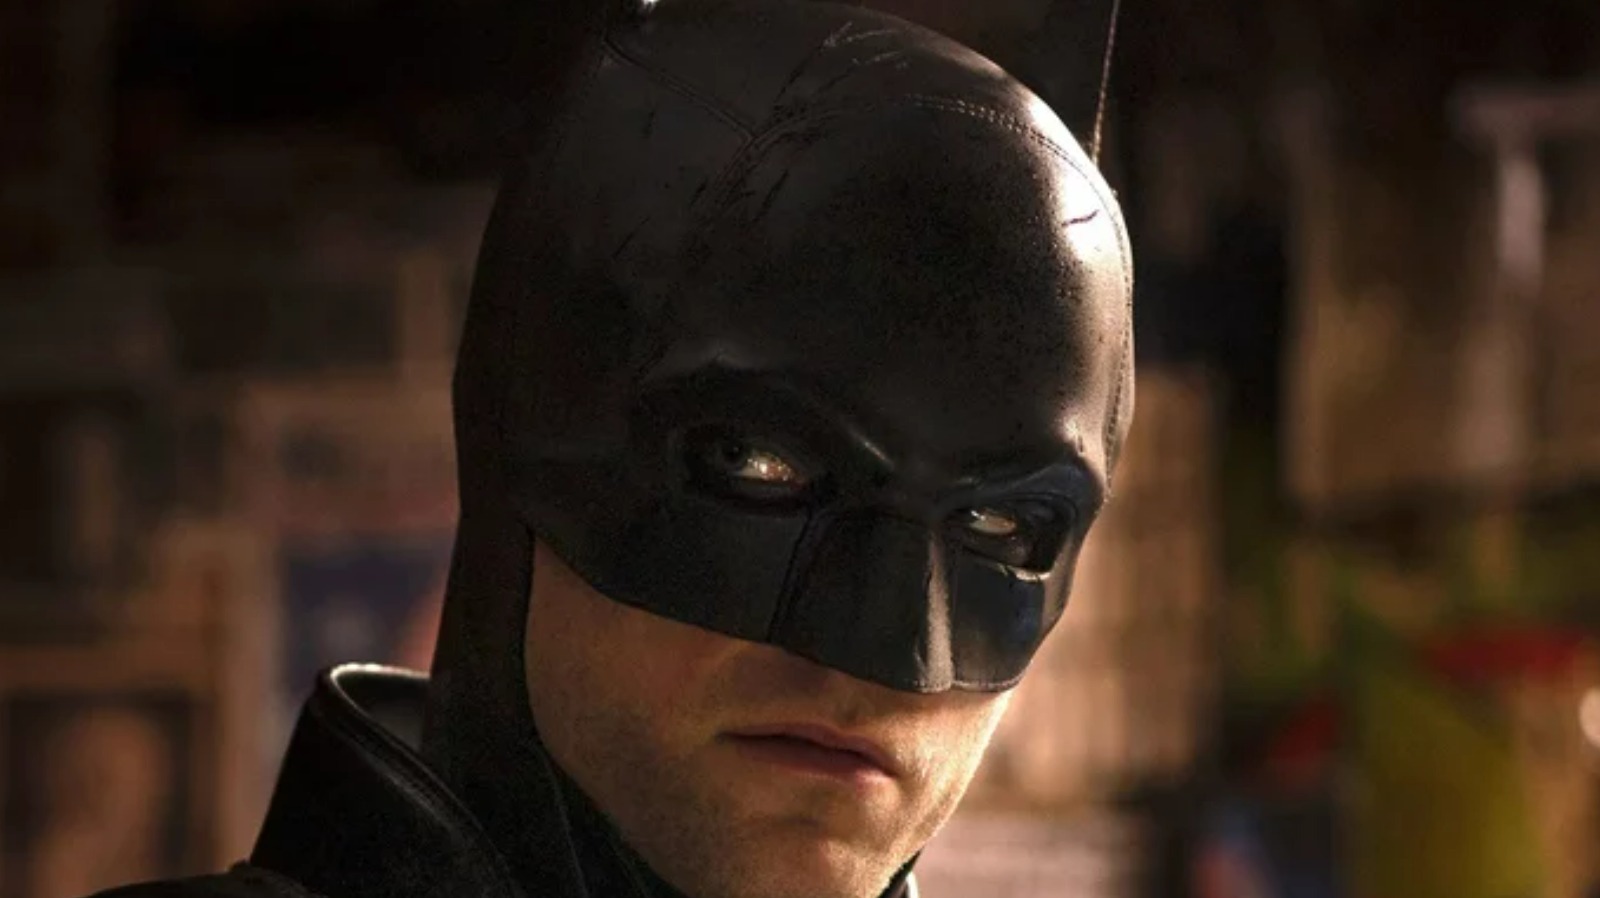 Gotham Knights' Review: Failing to Fill Batman's Cowl